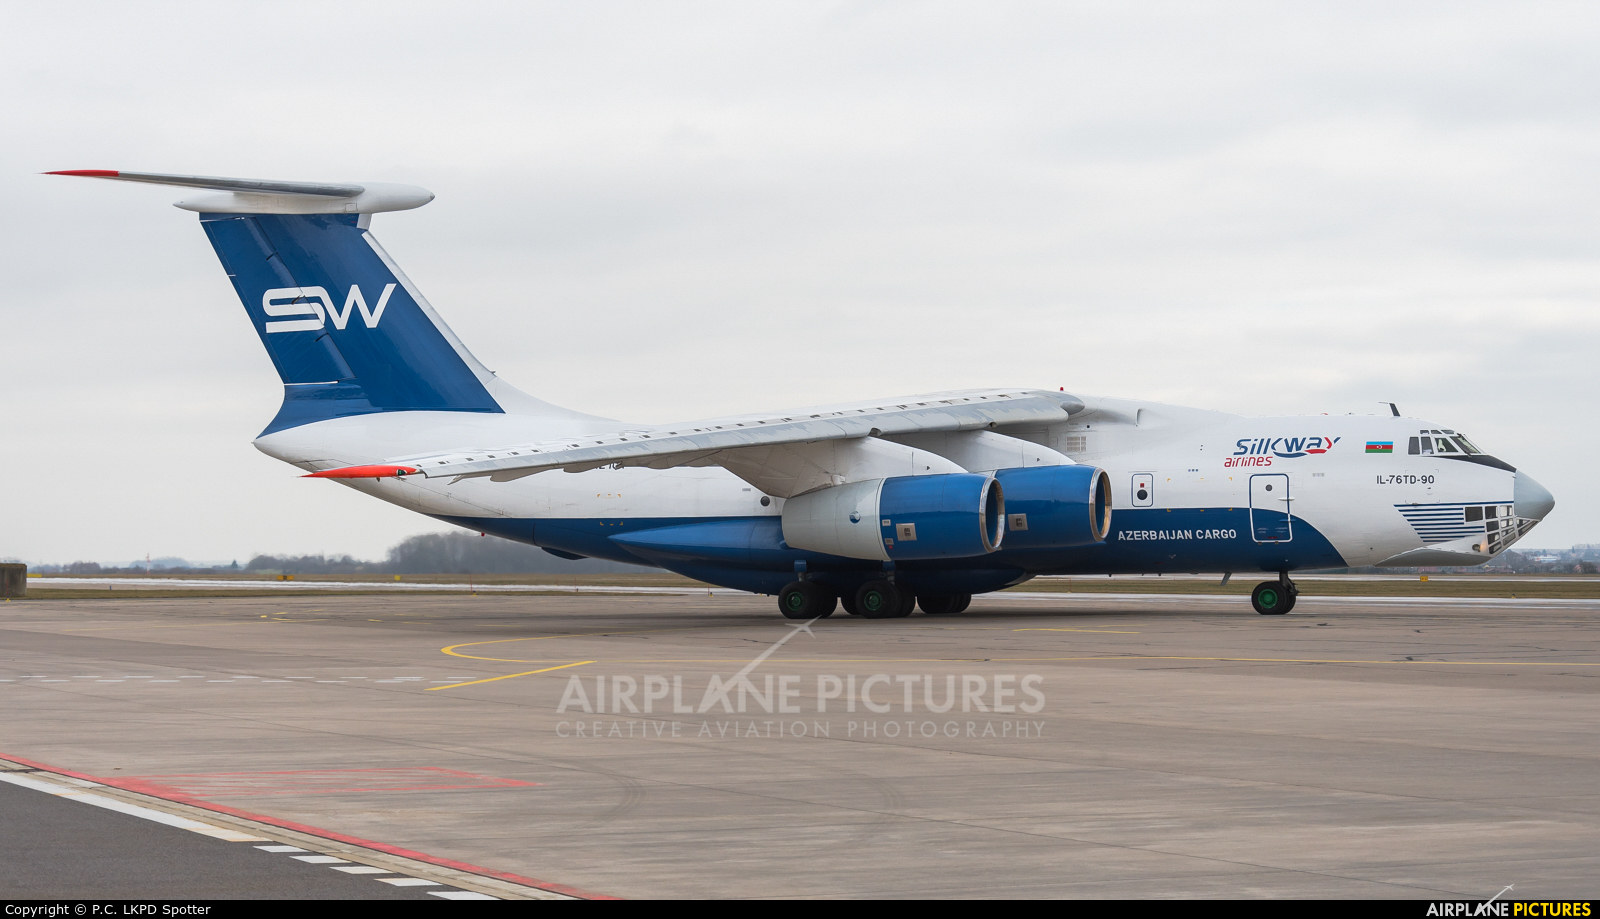 Silk Way Airlines 4K-AZ101 aircraft at Pardubice